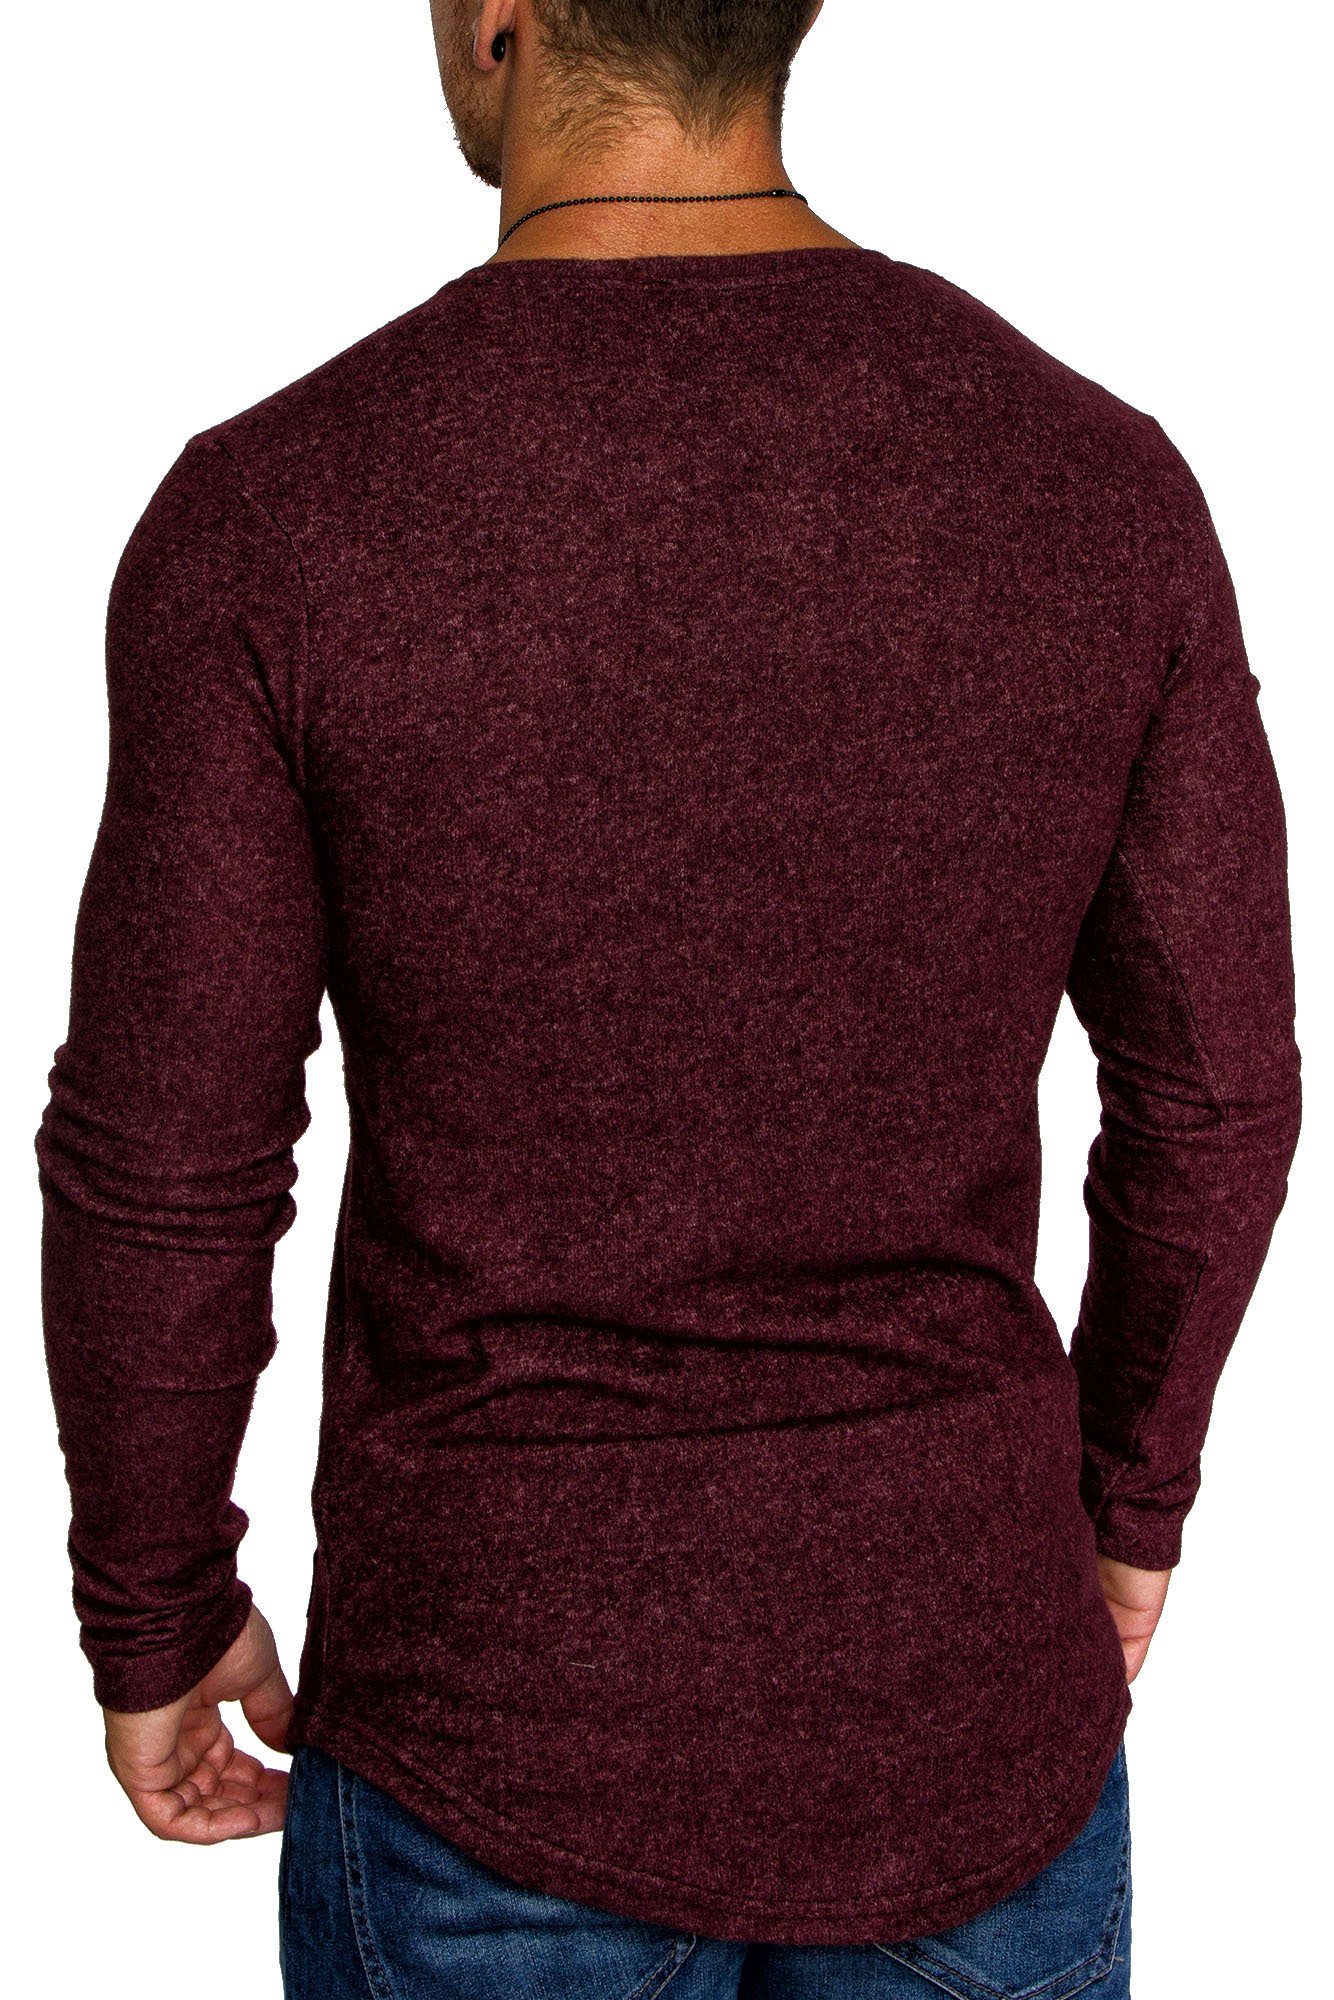 DAVIE Herren V-Ausschnitt Oversize Amaci&Sons Hoodie Pullover Pullover Bordeaux Melange Basic Feinstrick Sweatshirt mit